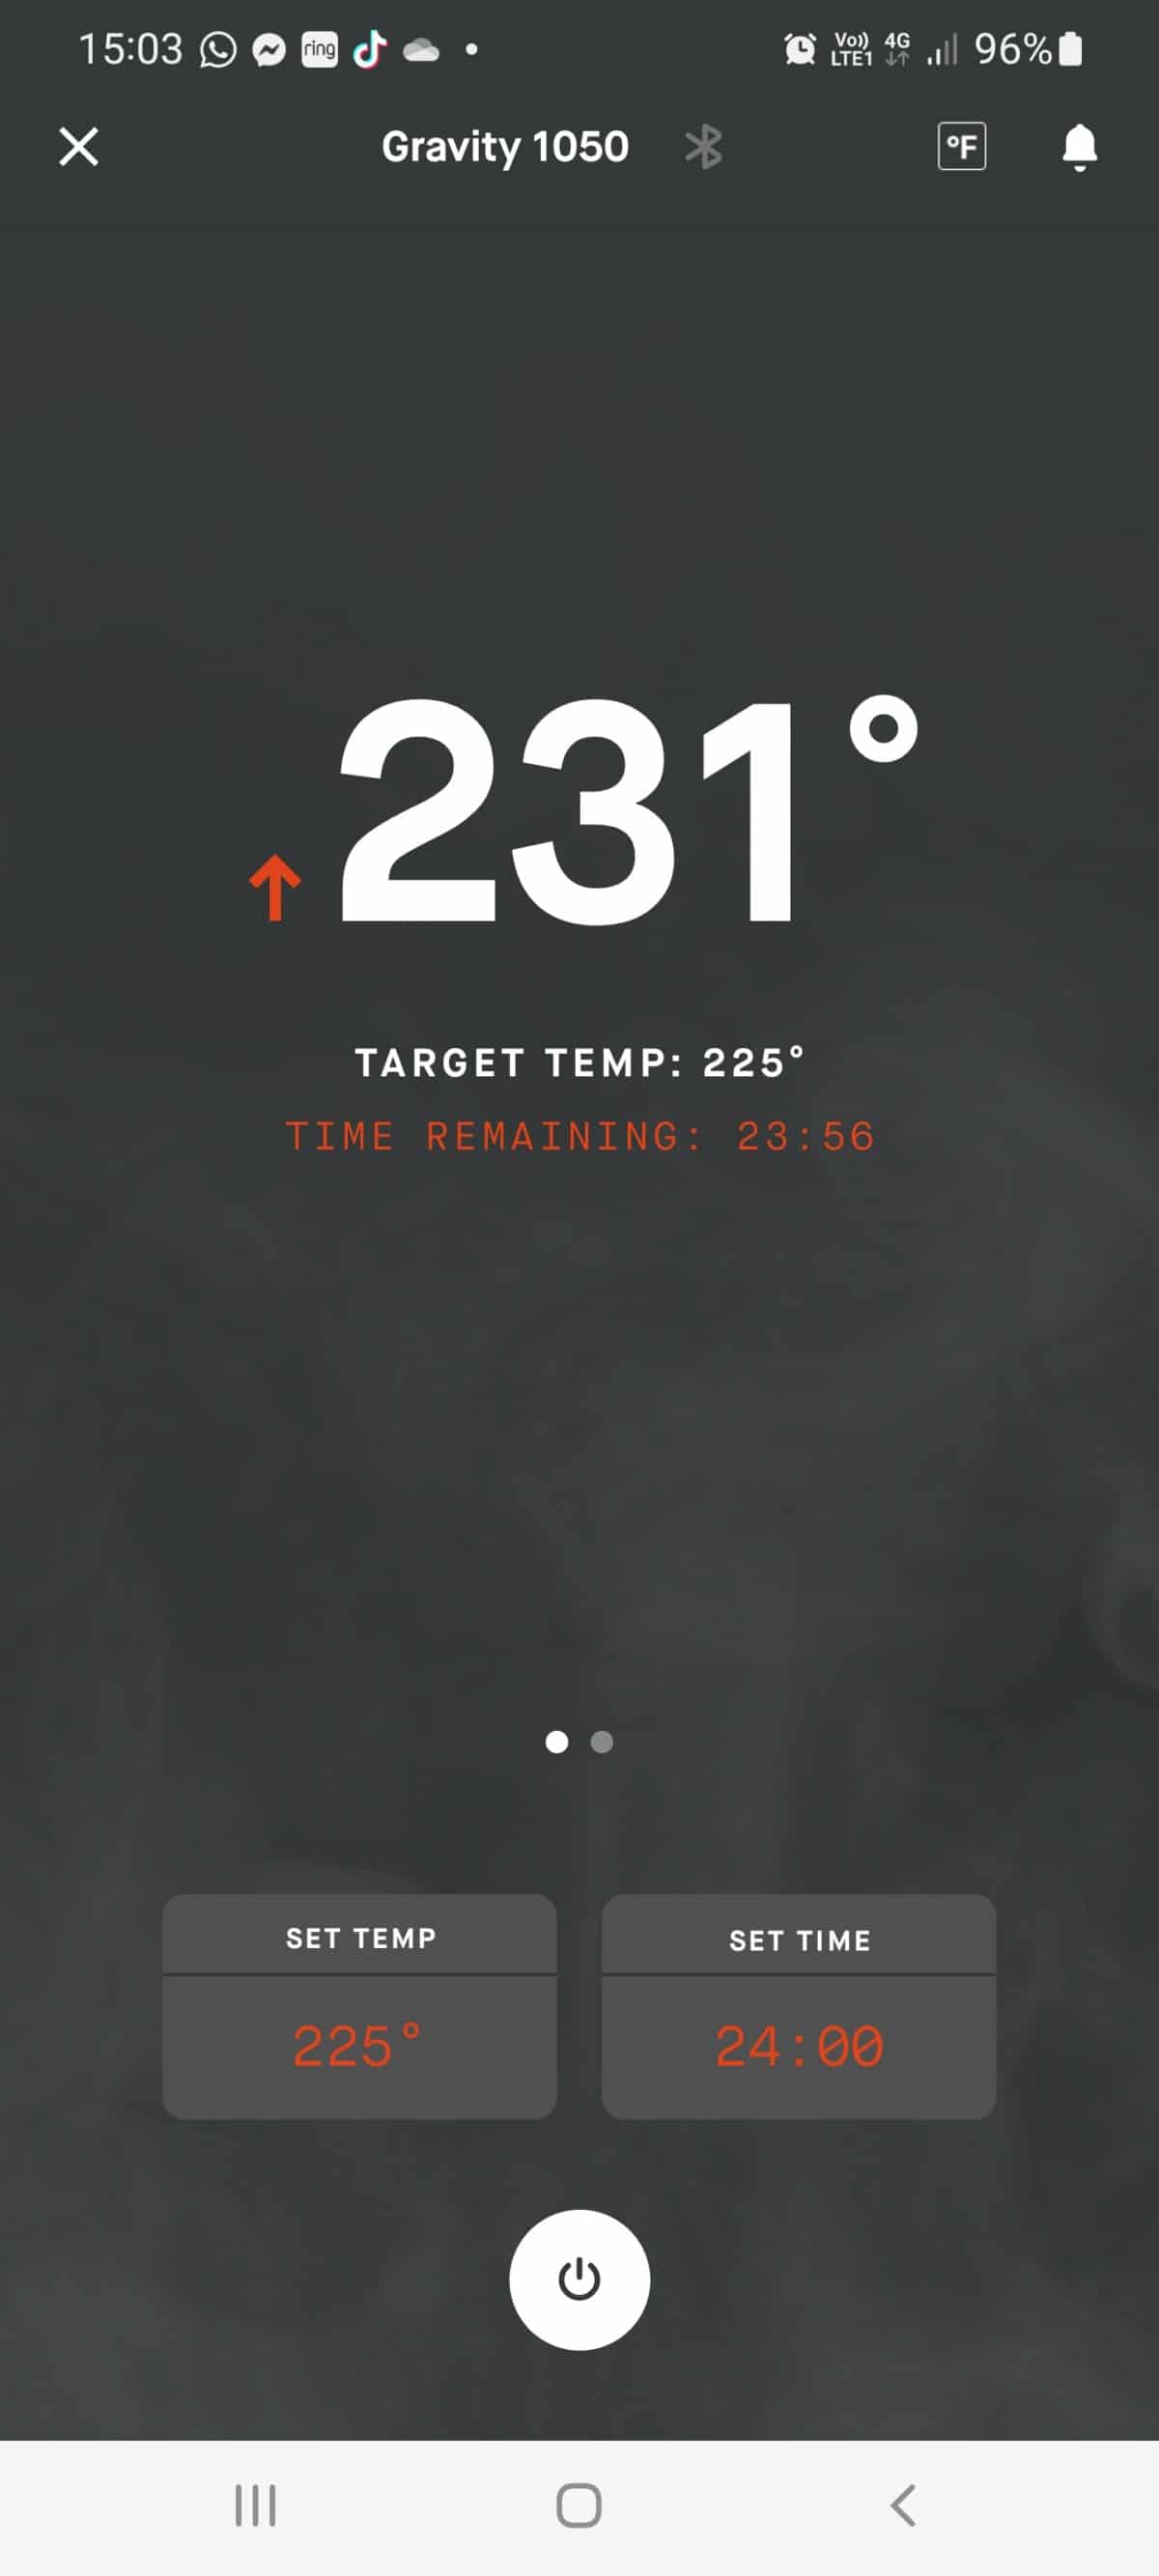 Masterbuilt gravity series smartphone app screenshot showing 231 degrees F